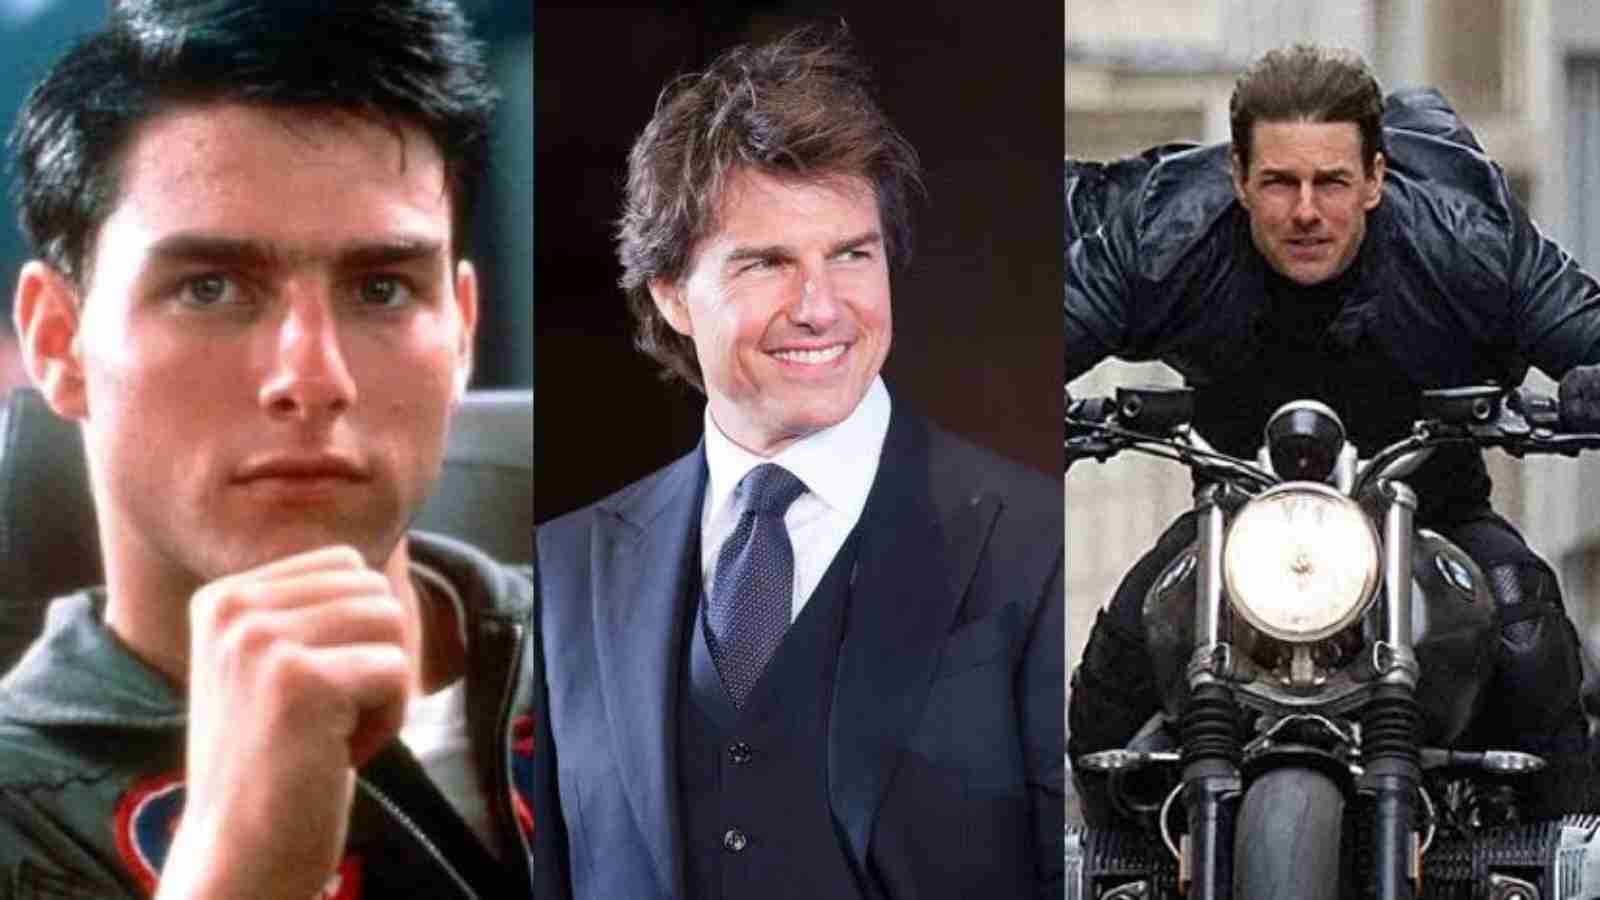 Tom Cruise returns in Top Gun Sequel